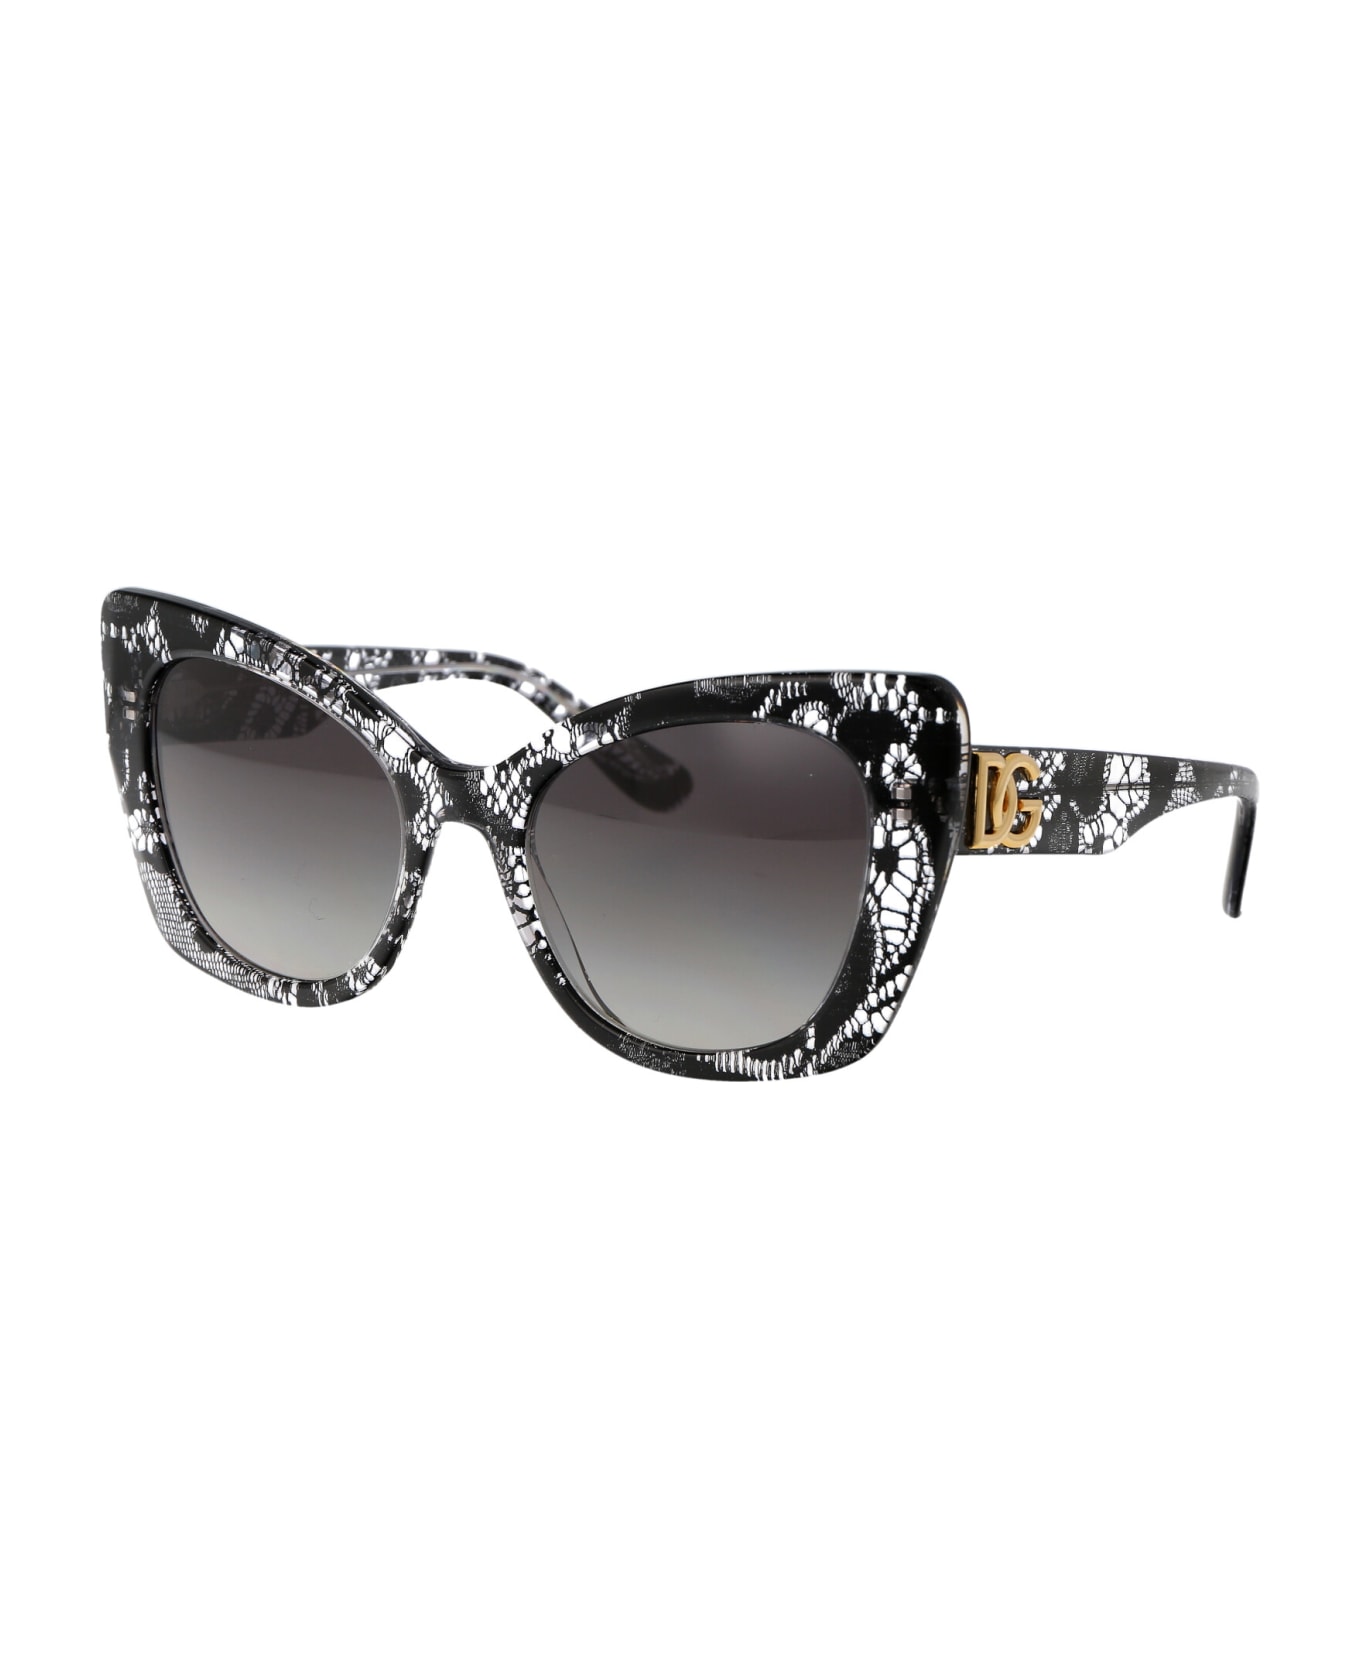 Dolce & Gabbana Eyewear 0dg4405 Sunglasses - 32878G BLACK LACE